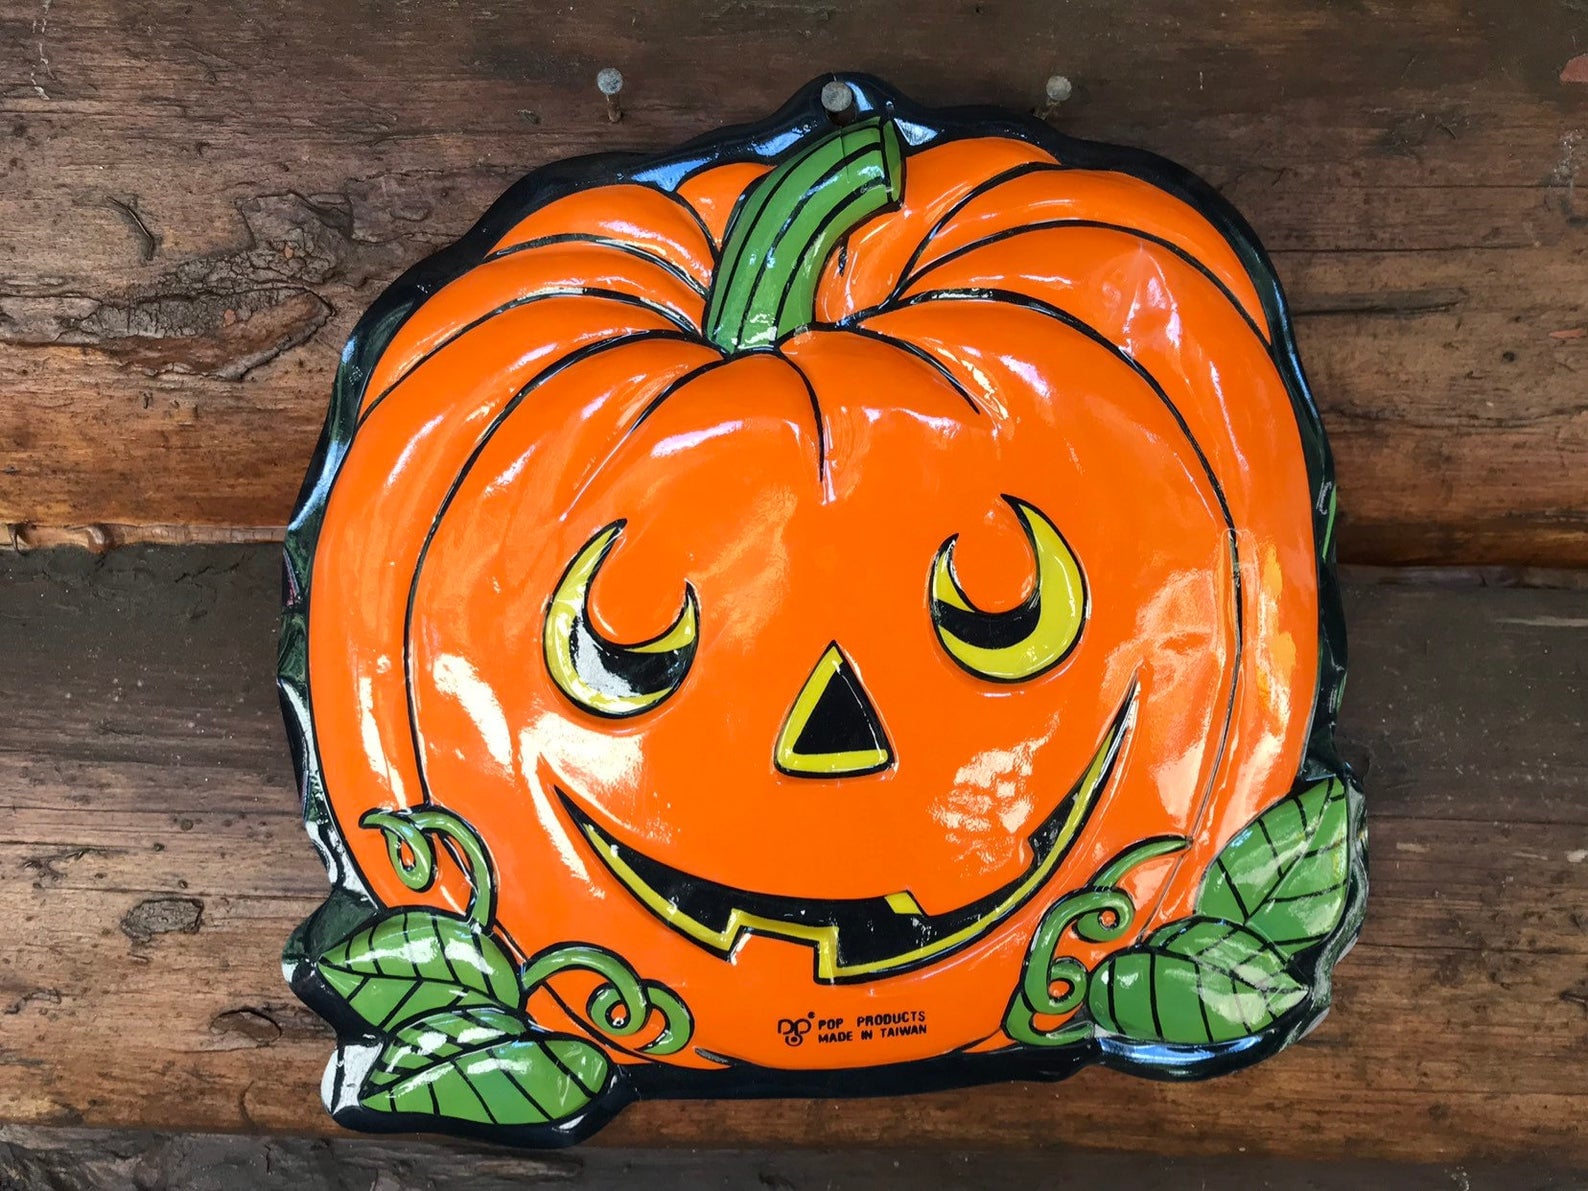 Details about   Lot of 10 Vintage Halloween Garland Banner 7'-8' Decoration Ghost Pumpkin NOS 